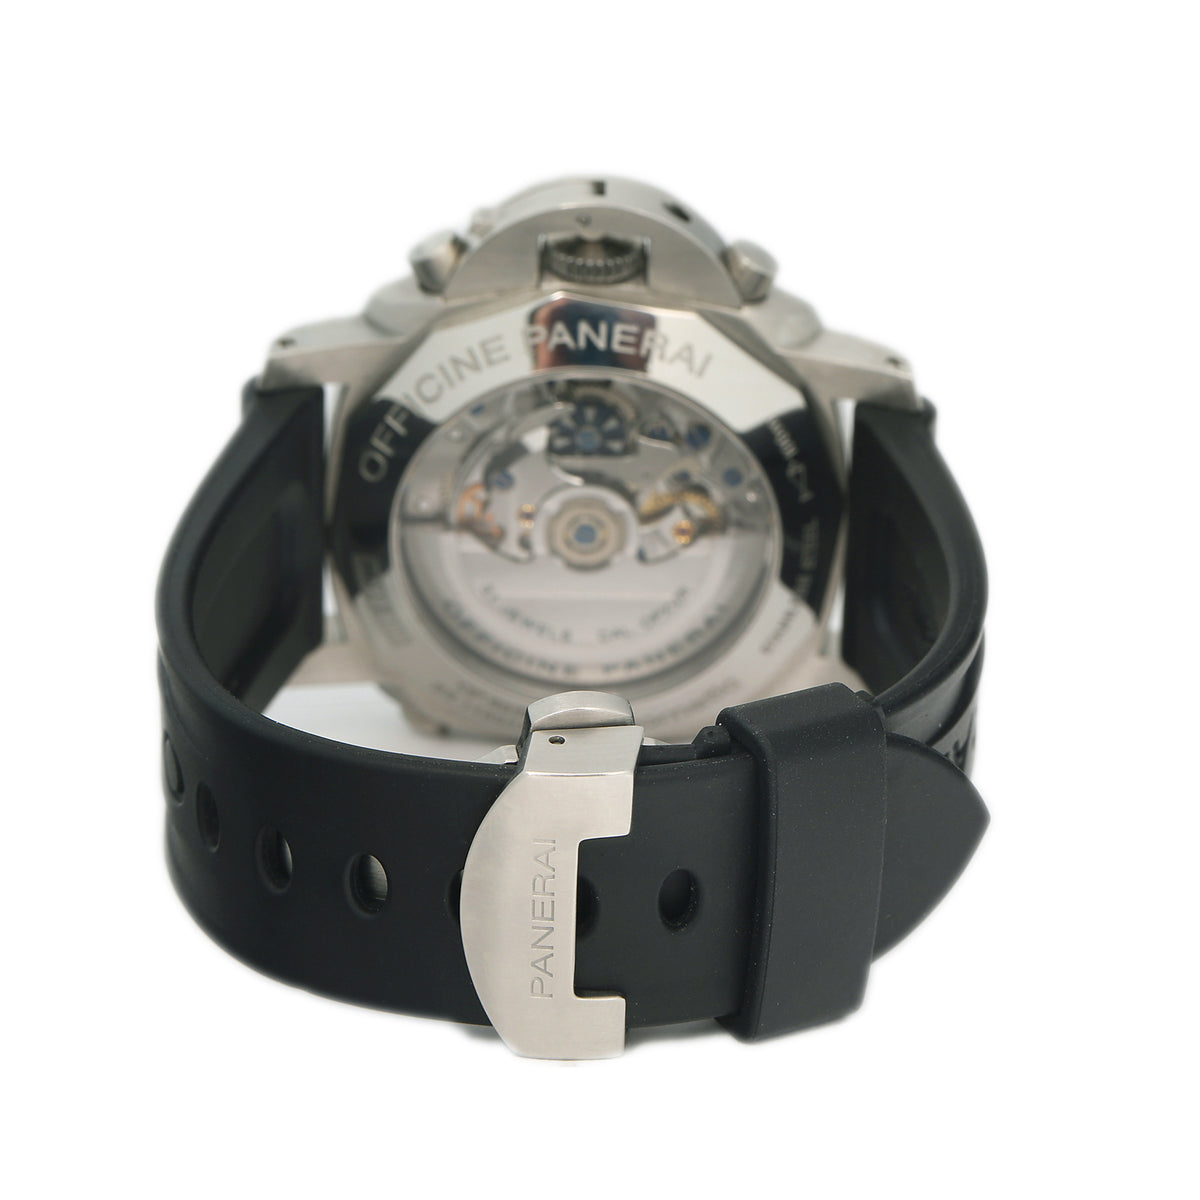 Panerai Luminor 1950 PAM00213 Rattrapante Steel Chronograph Watch 44mm Complete